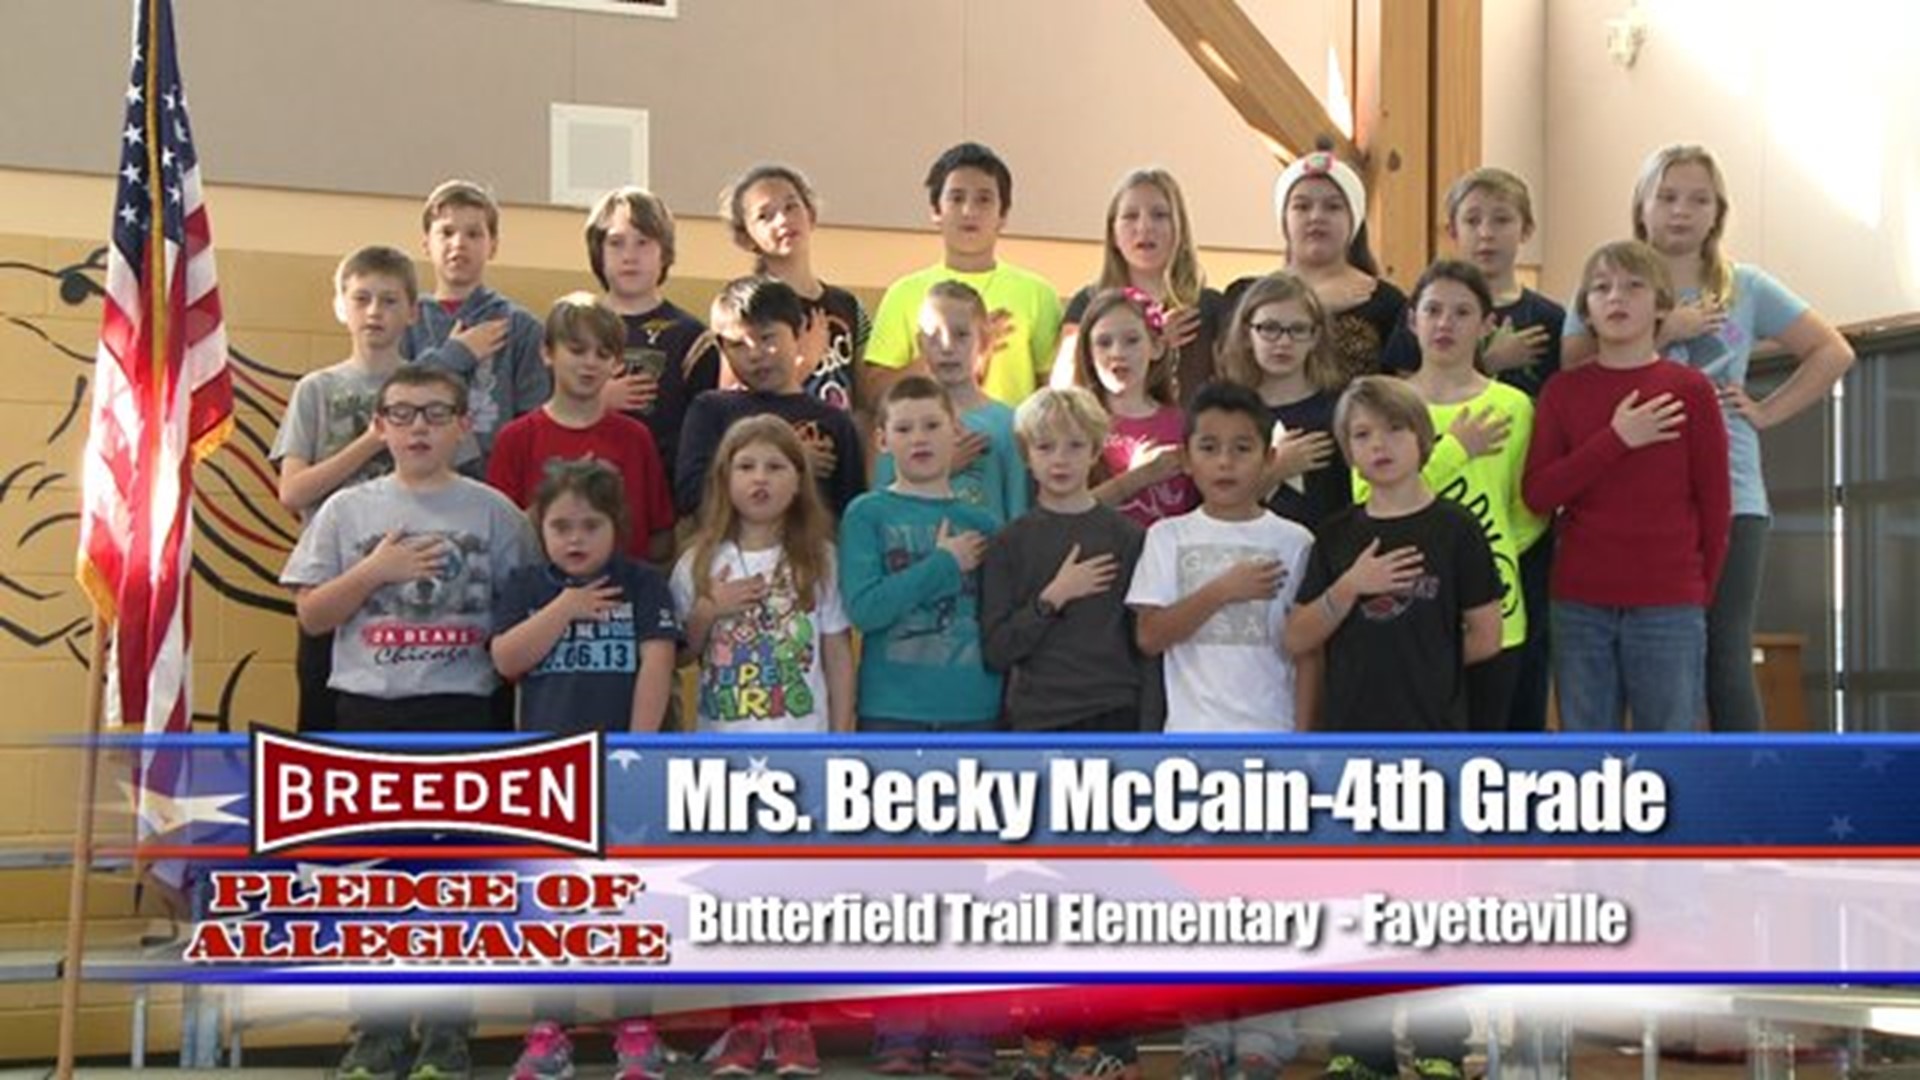 Butterfield Trail Elementary, Fayetteville - Mrs. Becky McCain - 4th Grade